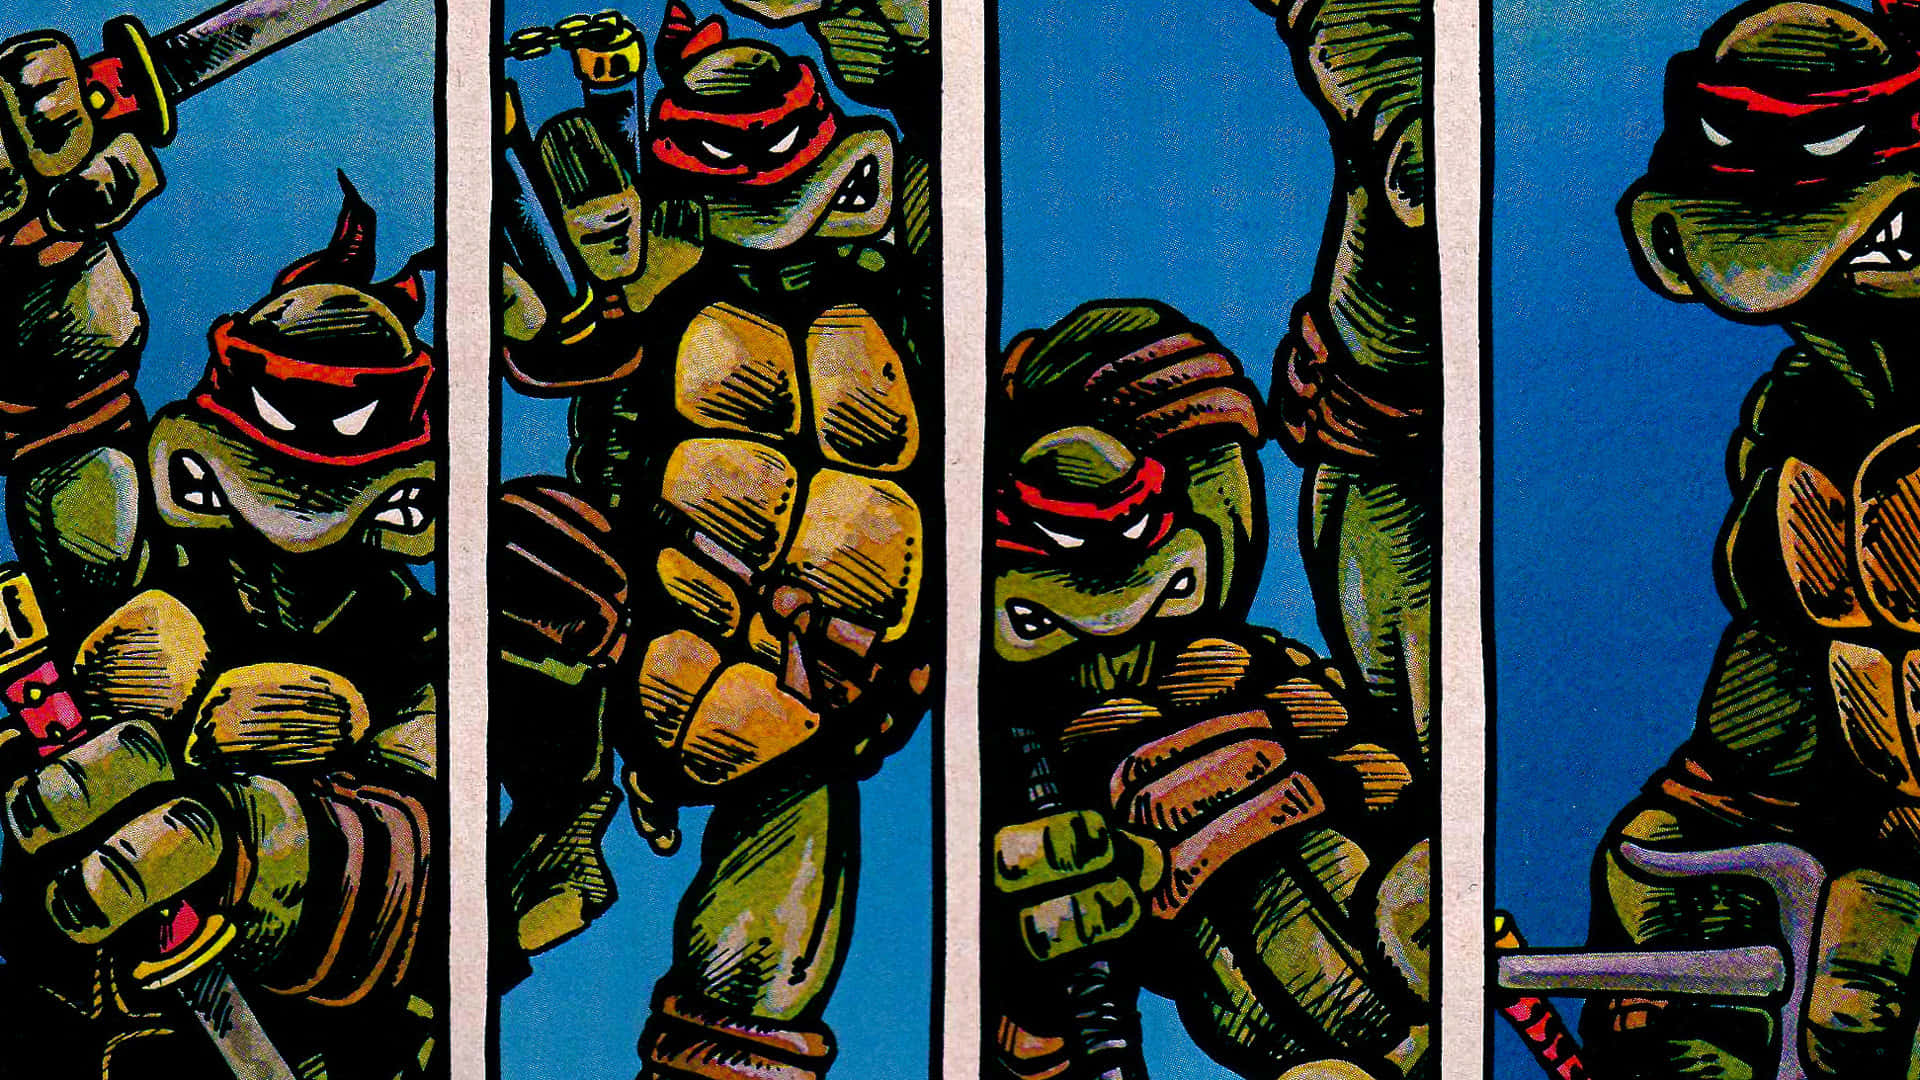 Teenage Mutant Ninja Turtles - The Heroes In A Half Shell